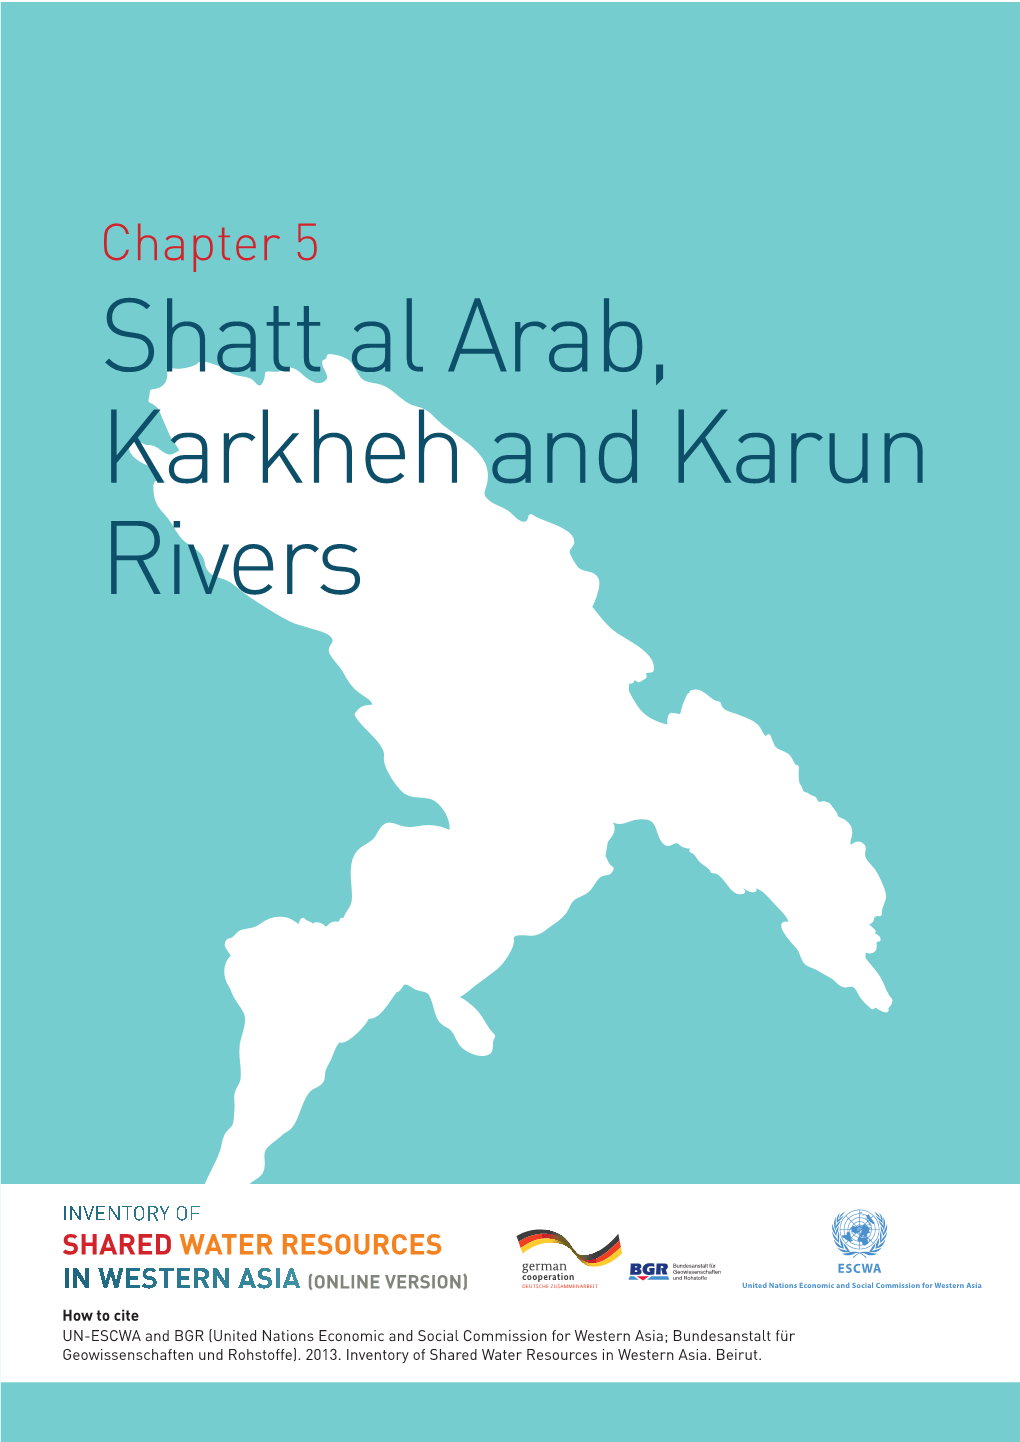 Chapter 5 Shatt Al Arab, Karkheh and Karun Rivers